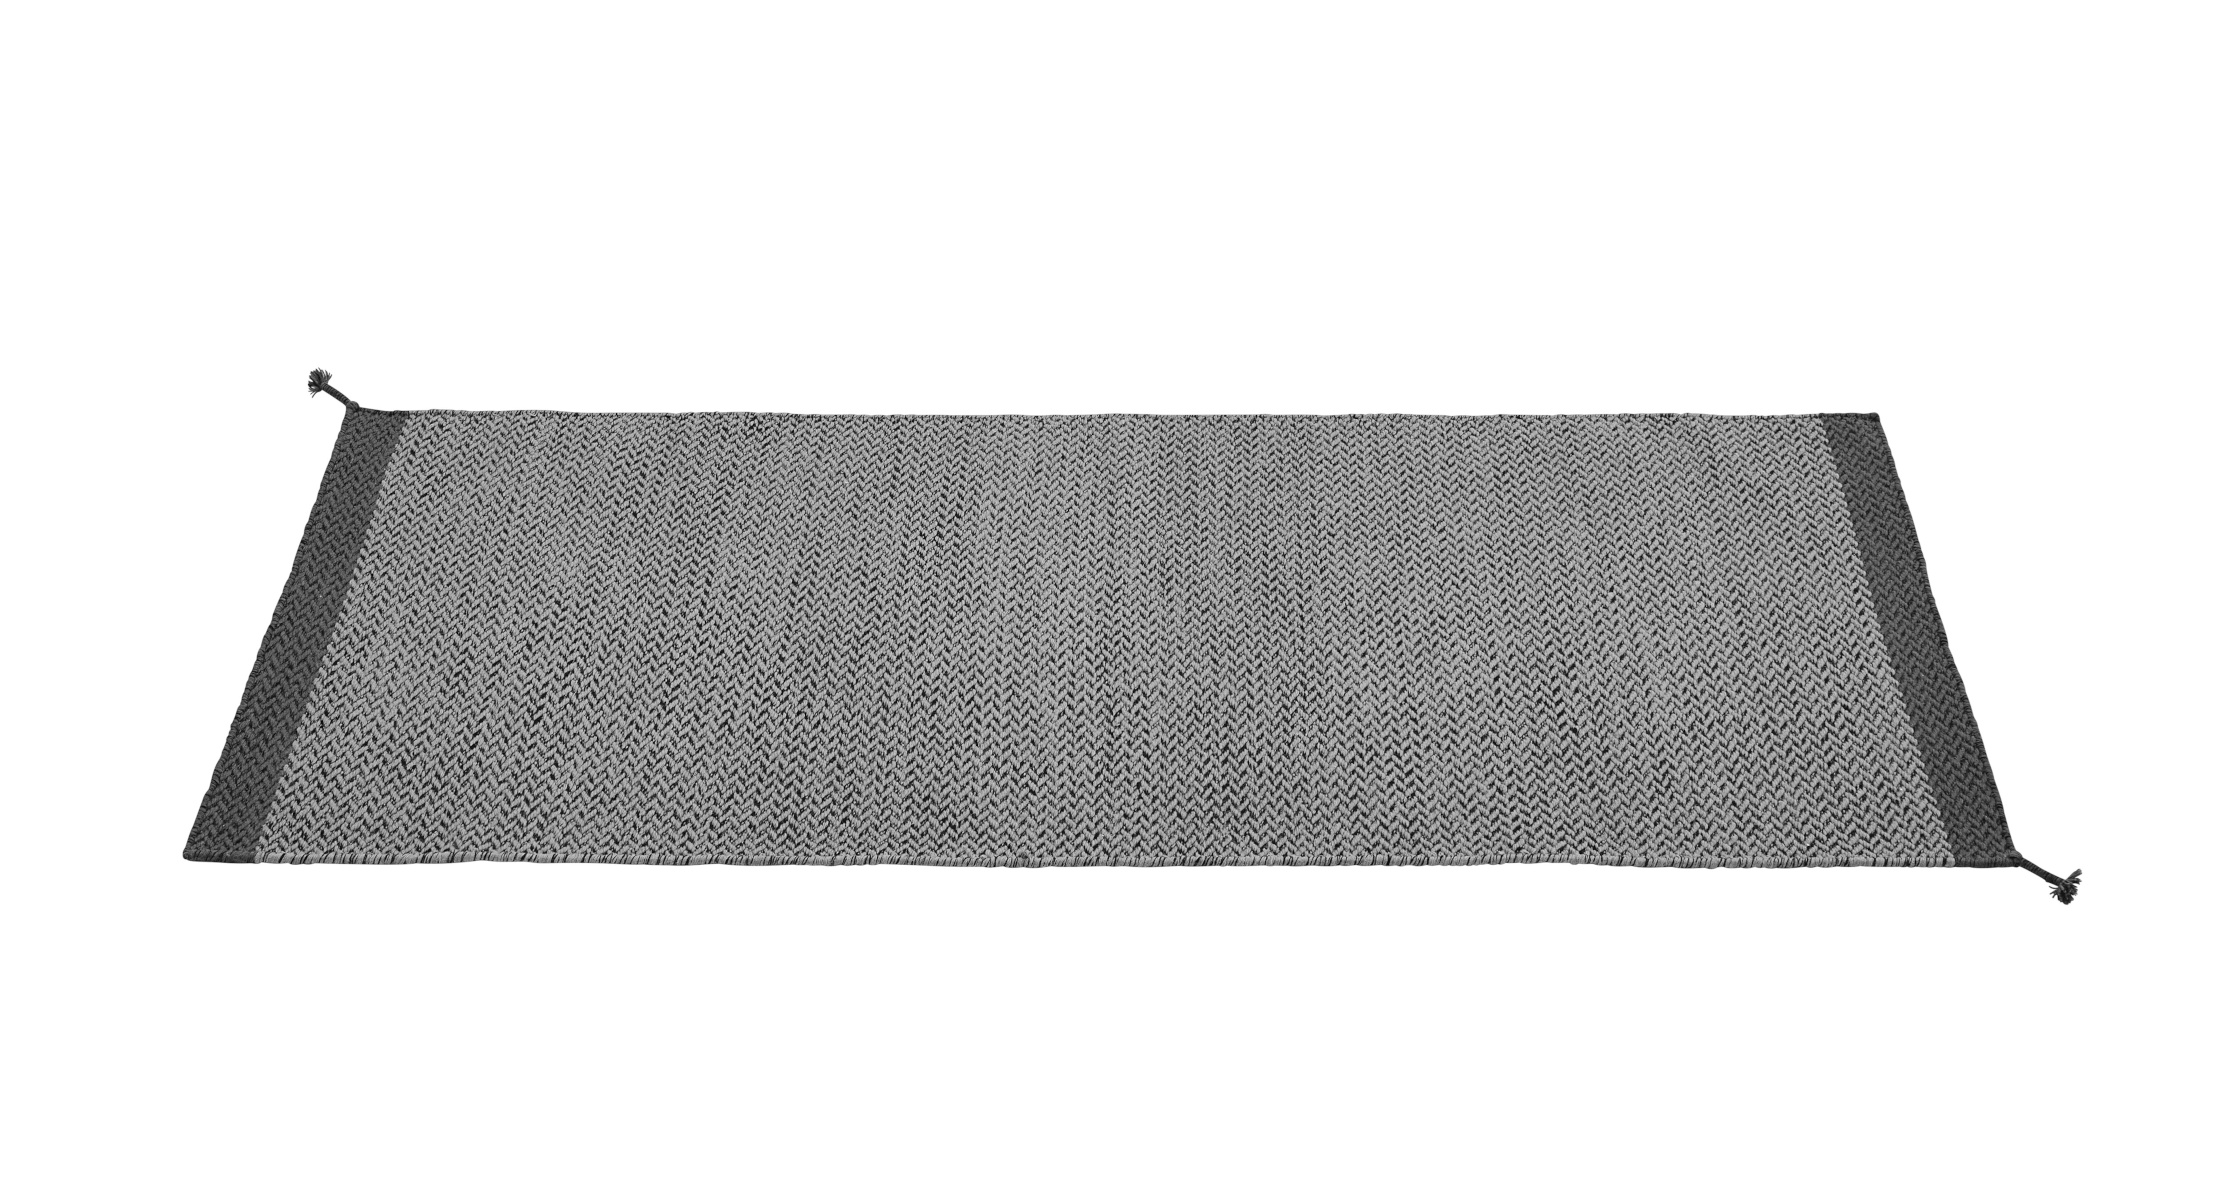 Ply Teppich, 80 x 200 cm, schwarz / weiß